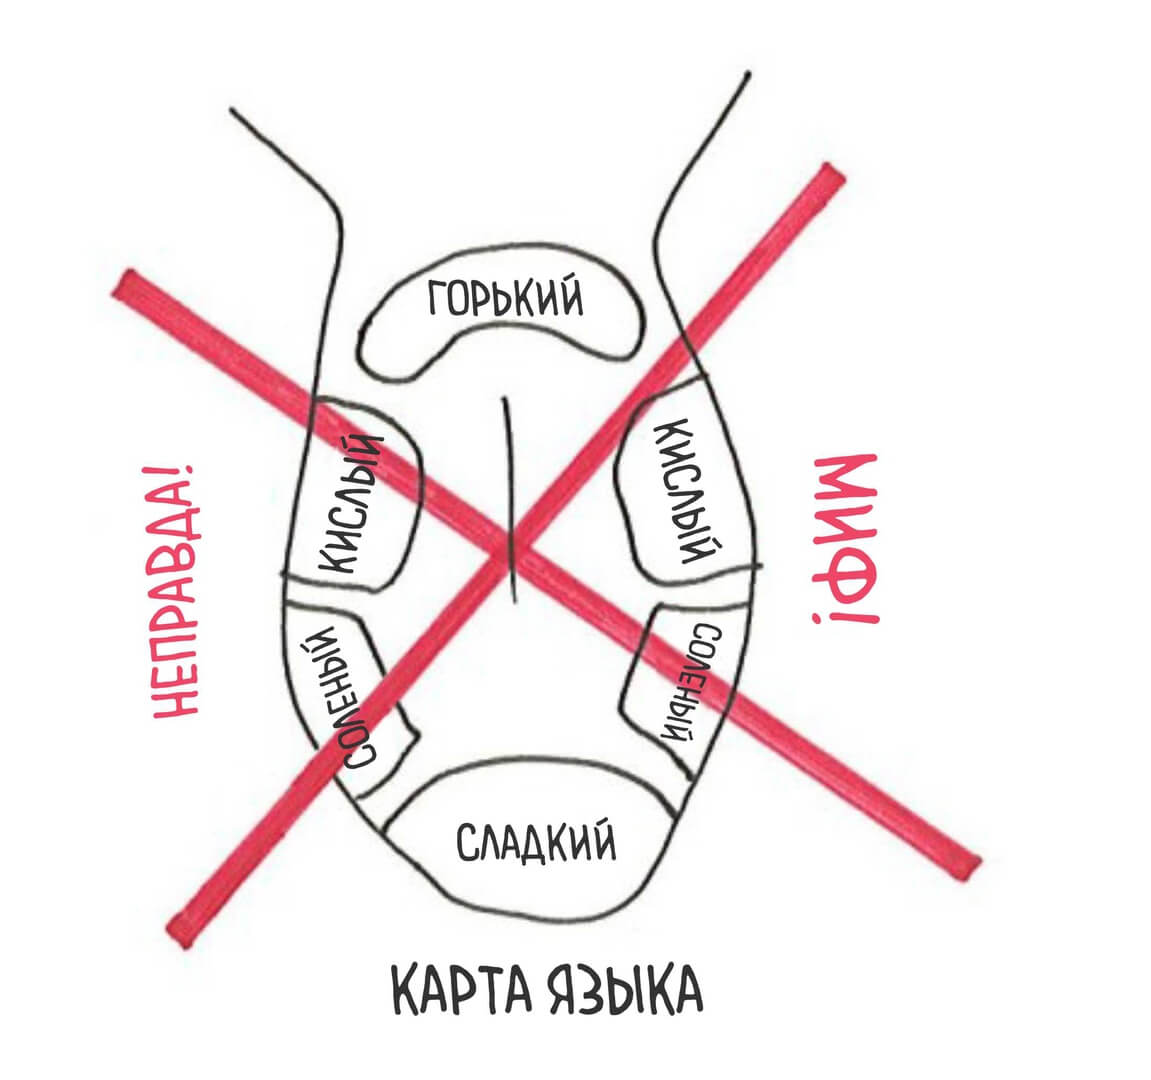 anatomia1ru